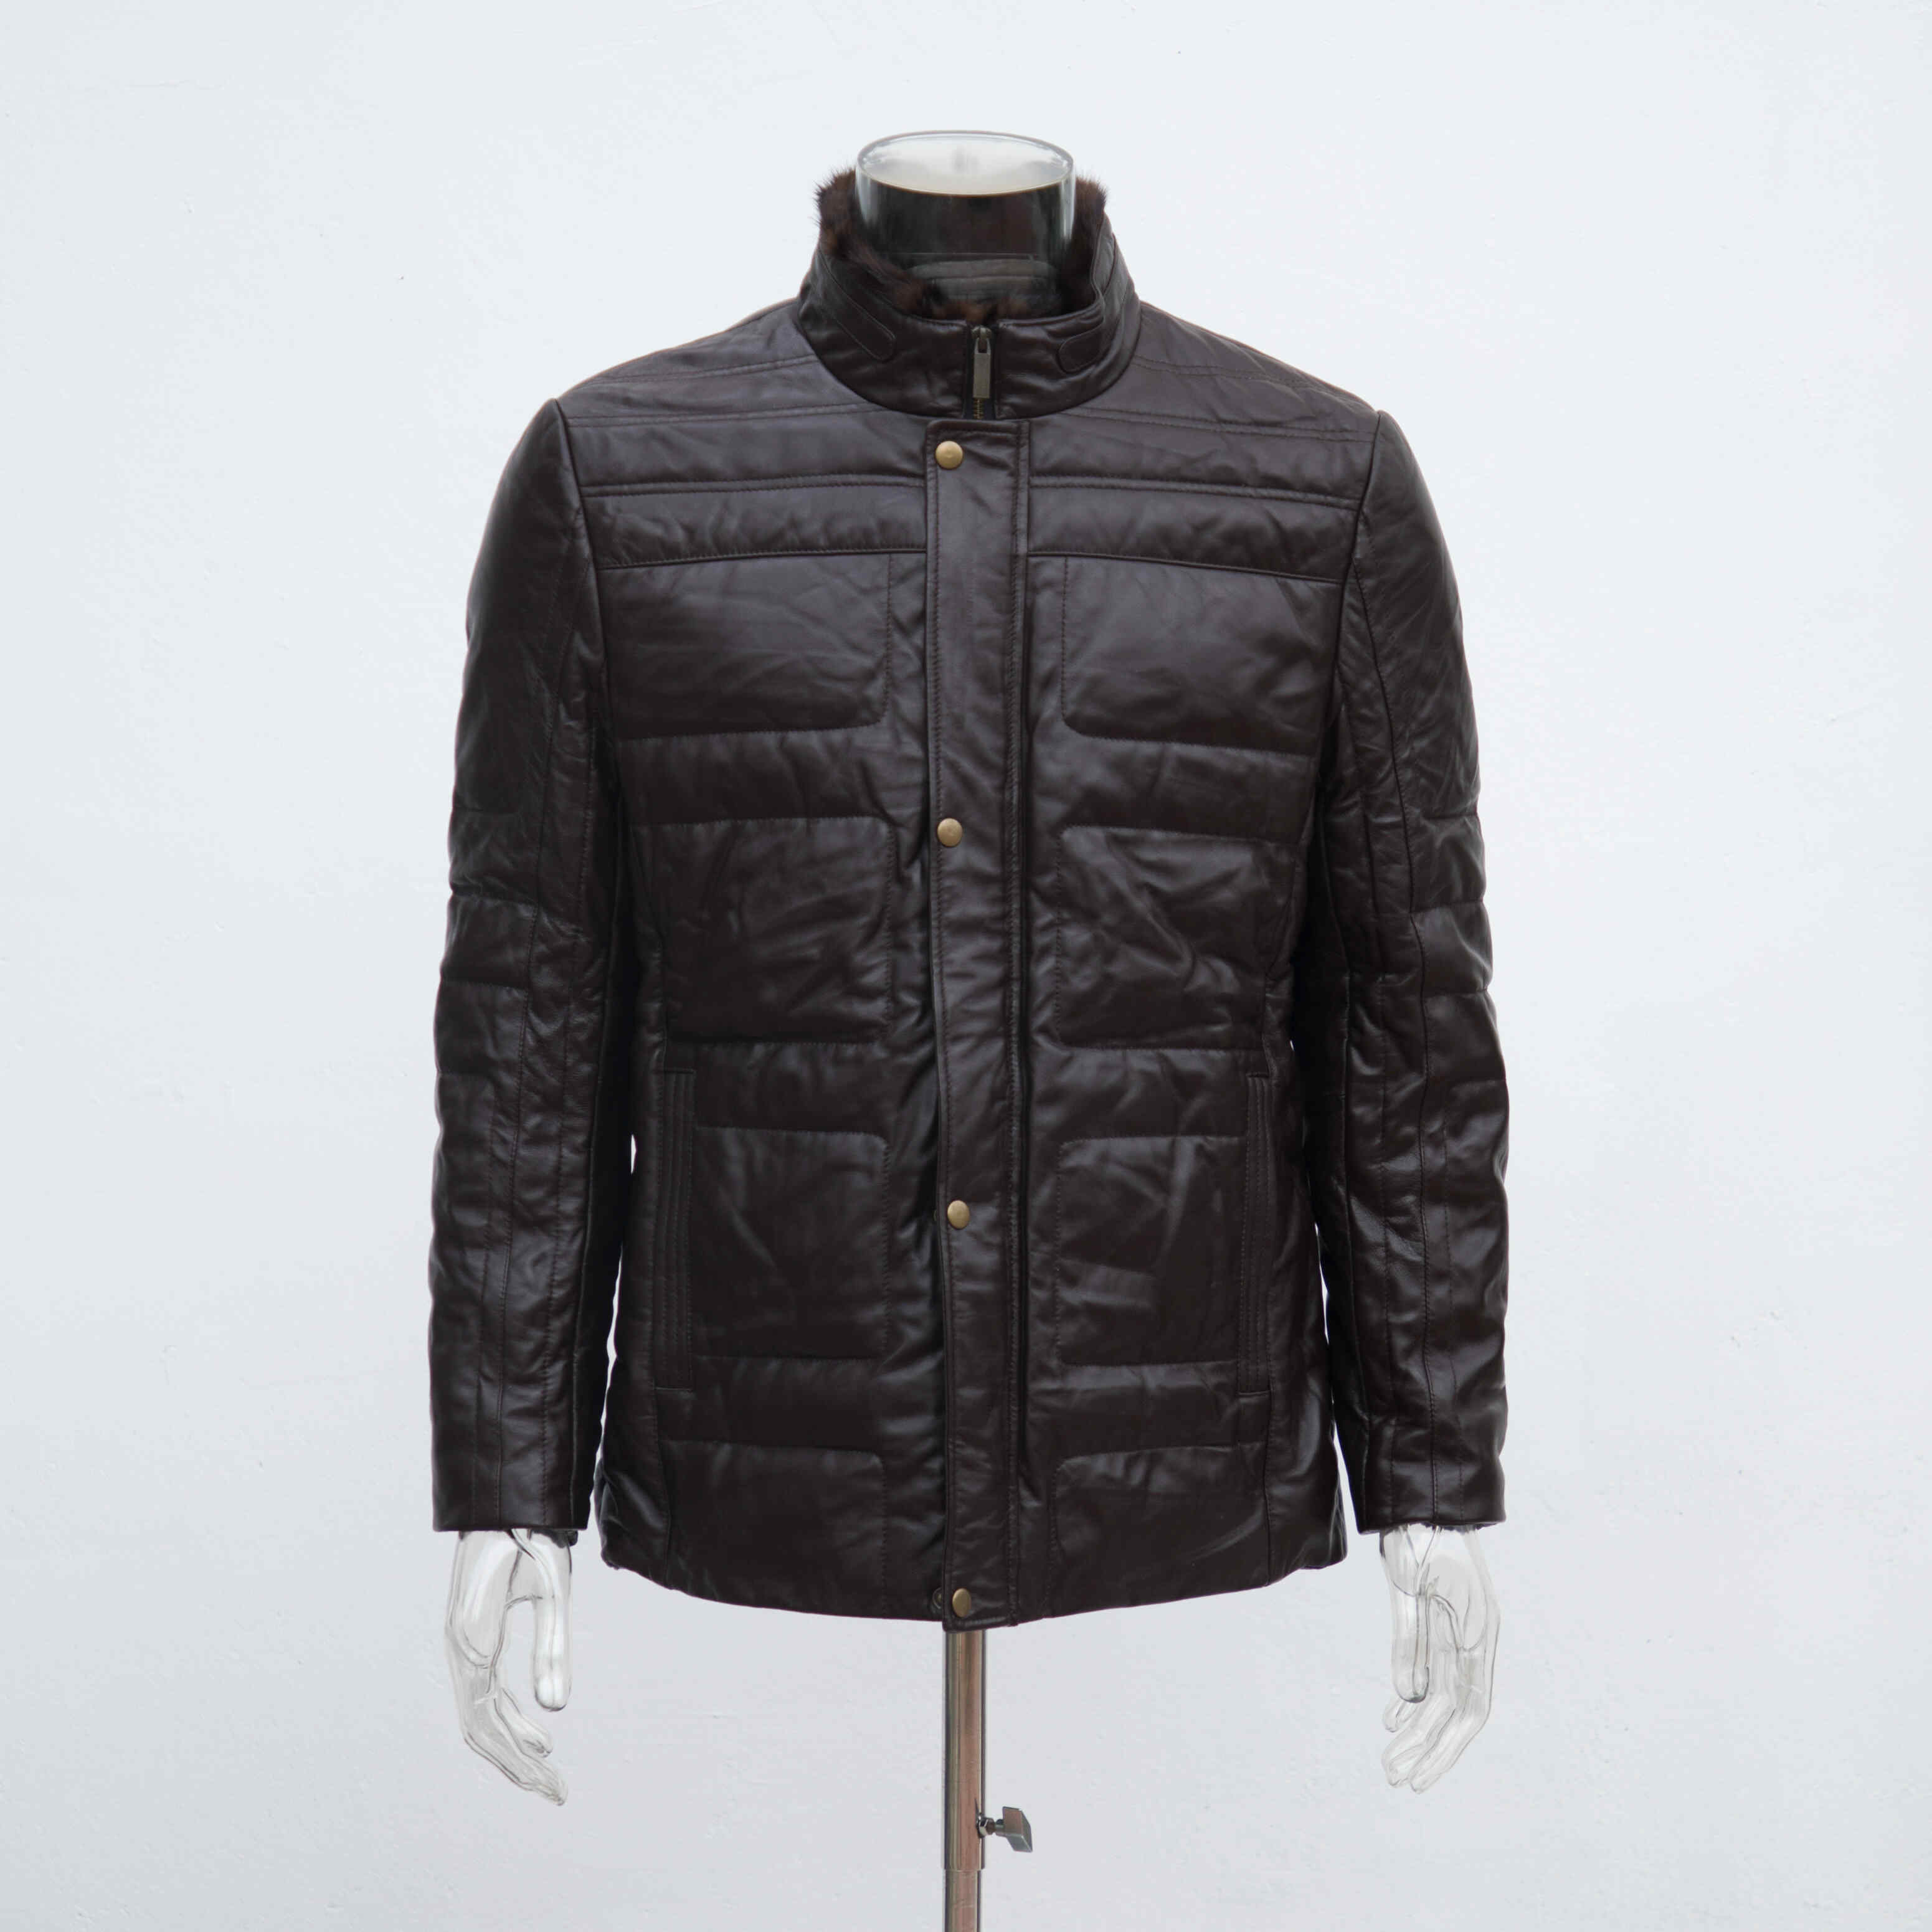 winter leather jacket